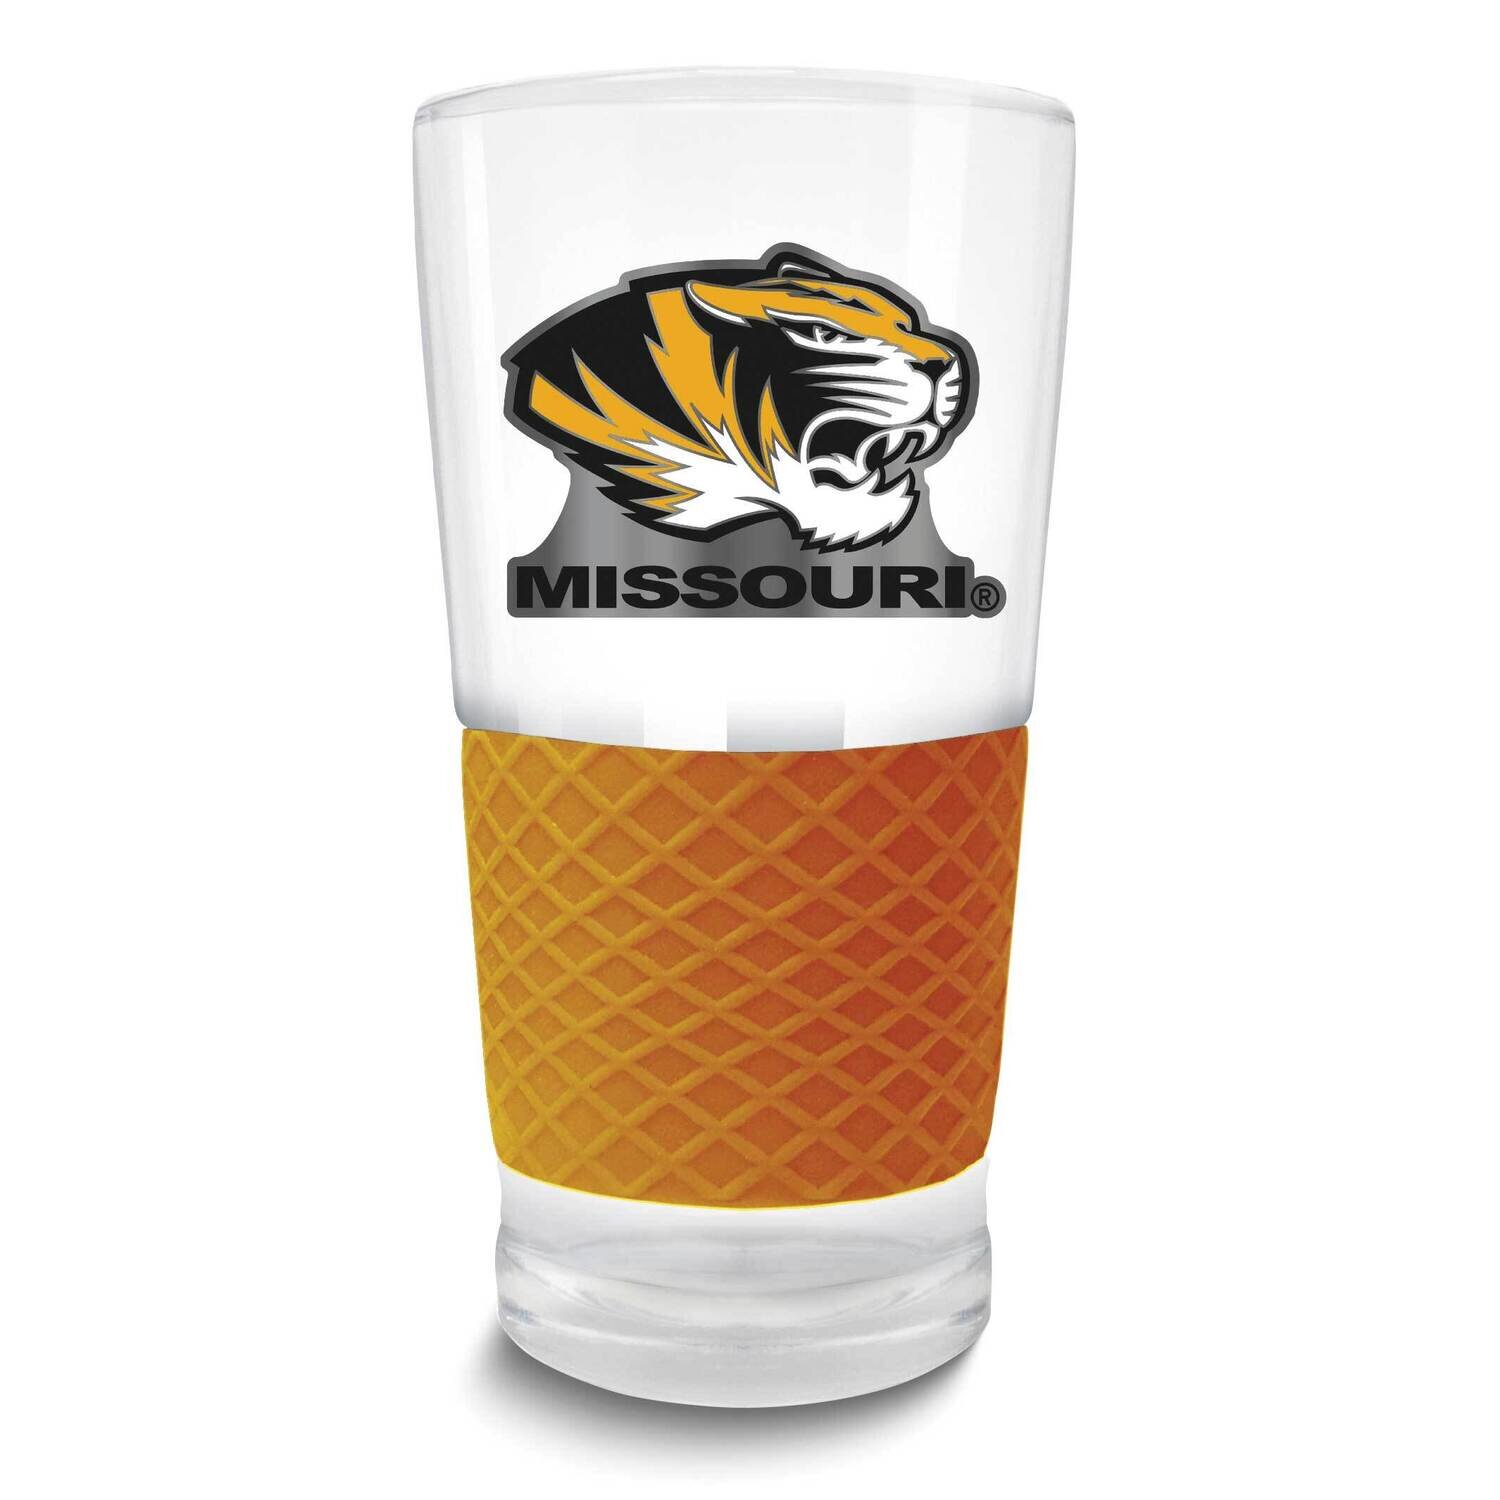 Collegiate Univeristy of Missouri Score Pint Glass GM26126-UMI